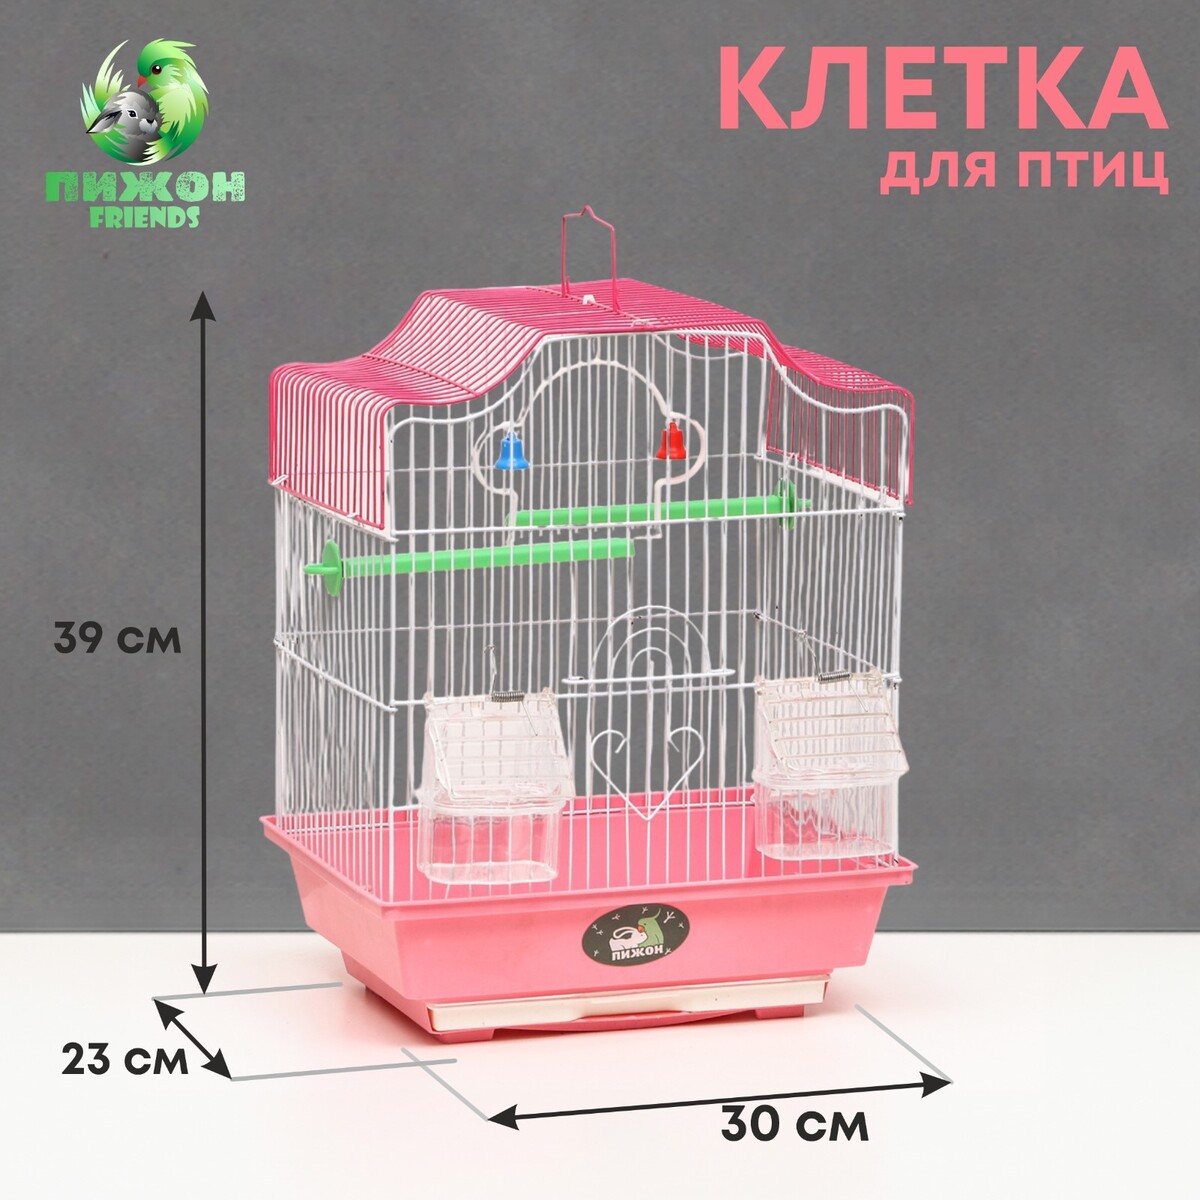 Клетка для птиц укомплектованная bd-1/4f, 30 х 23 х 39 см, розовая клетка для птиц укомплектованная bd 1 2q 30 х 23 х 39 см синяя